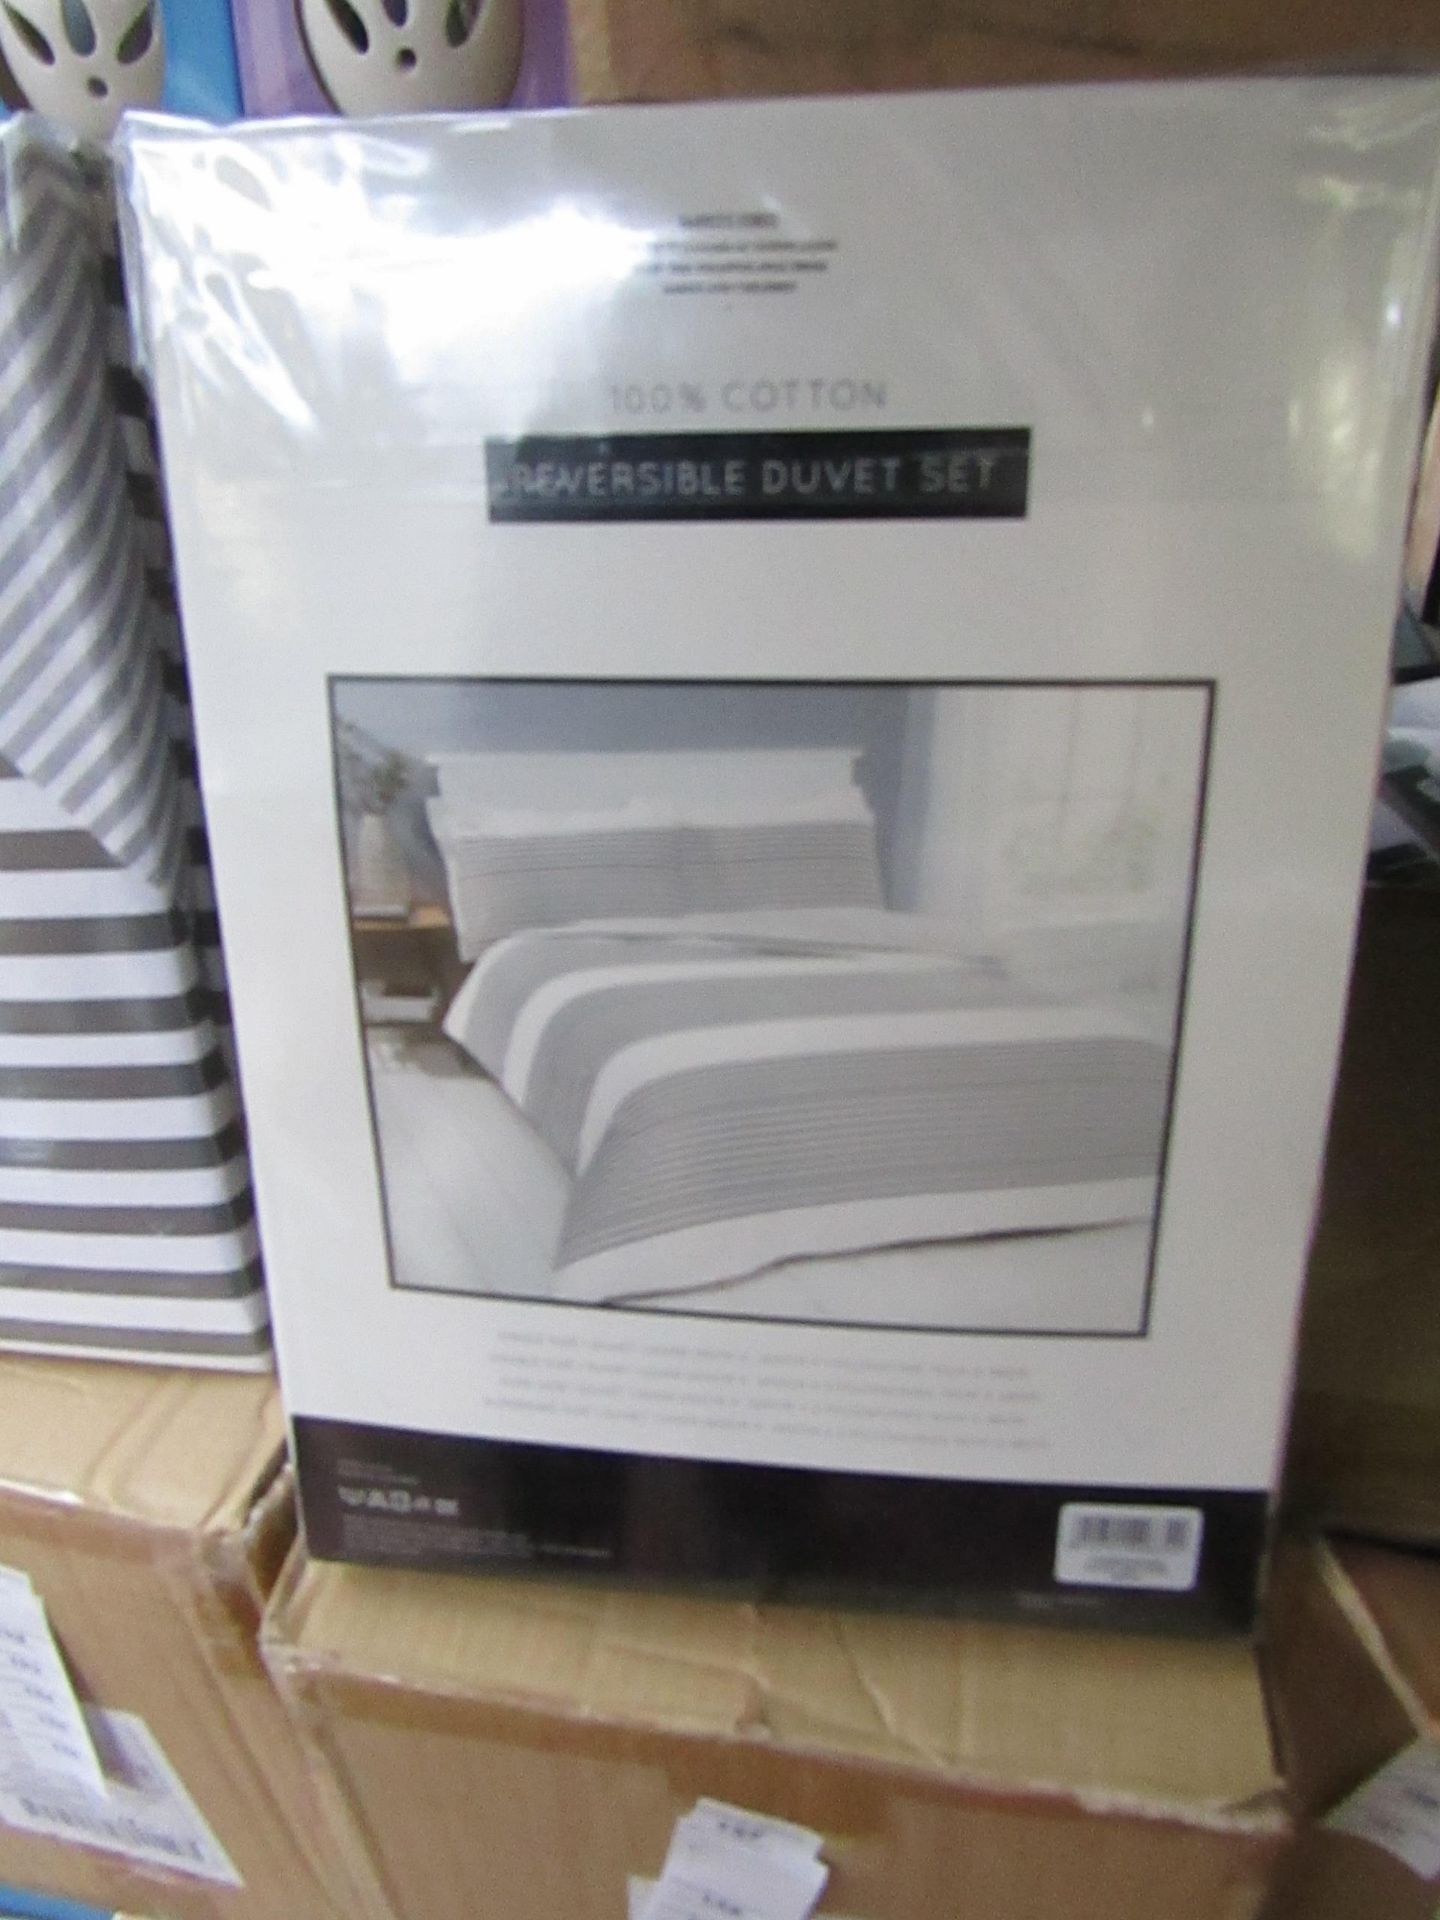 Sanctuary Harper Mono king Reversible Duvet Set,100 % Cotton RRP £69.99 New & Packaged